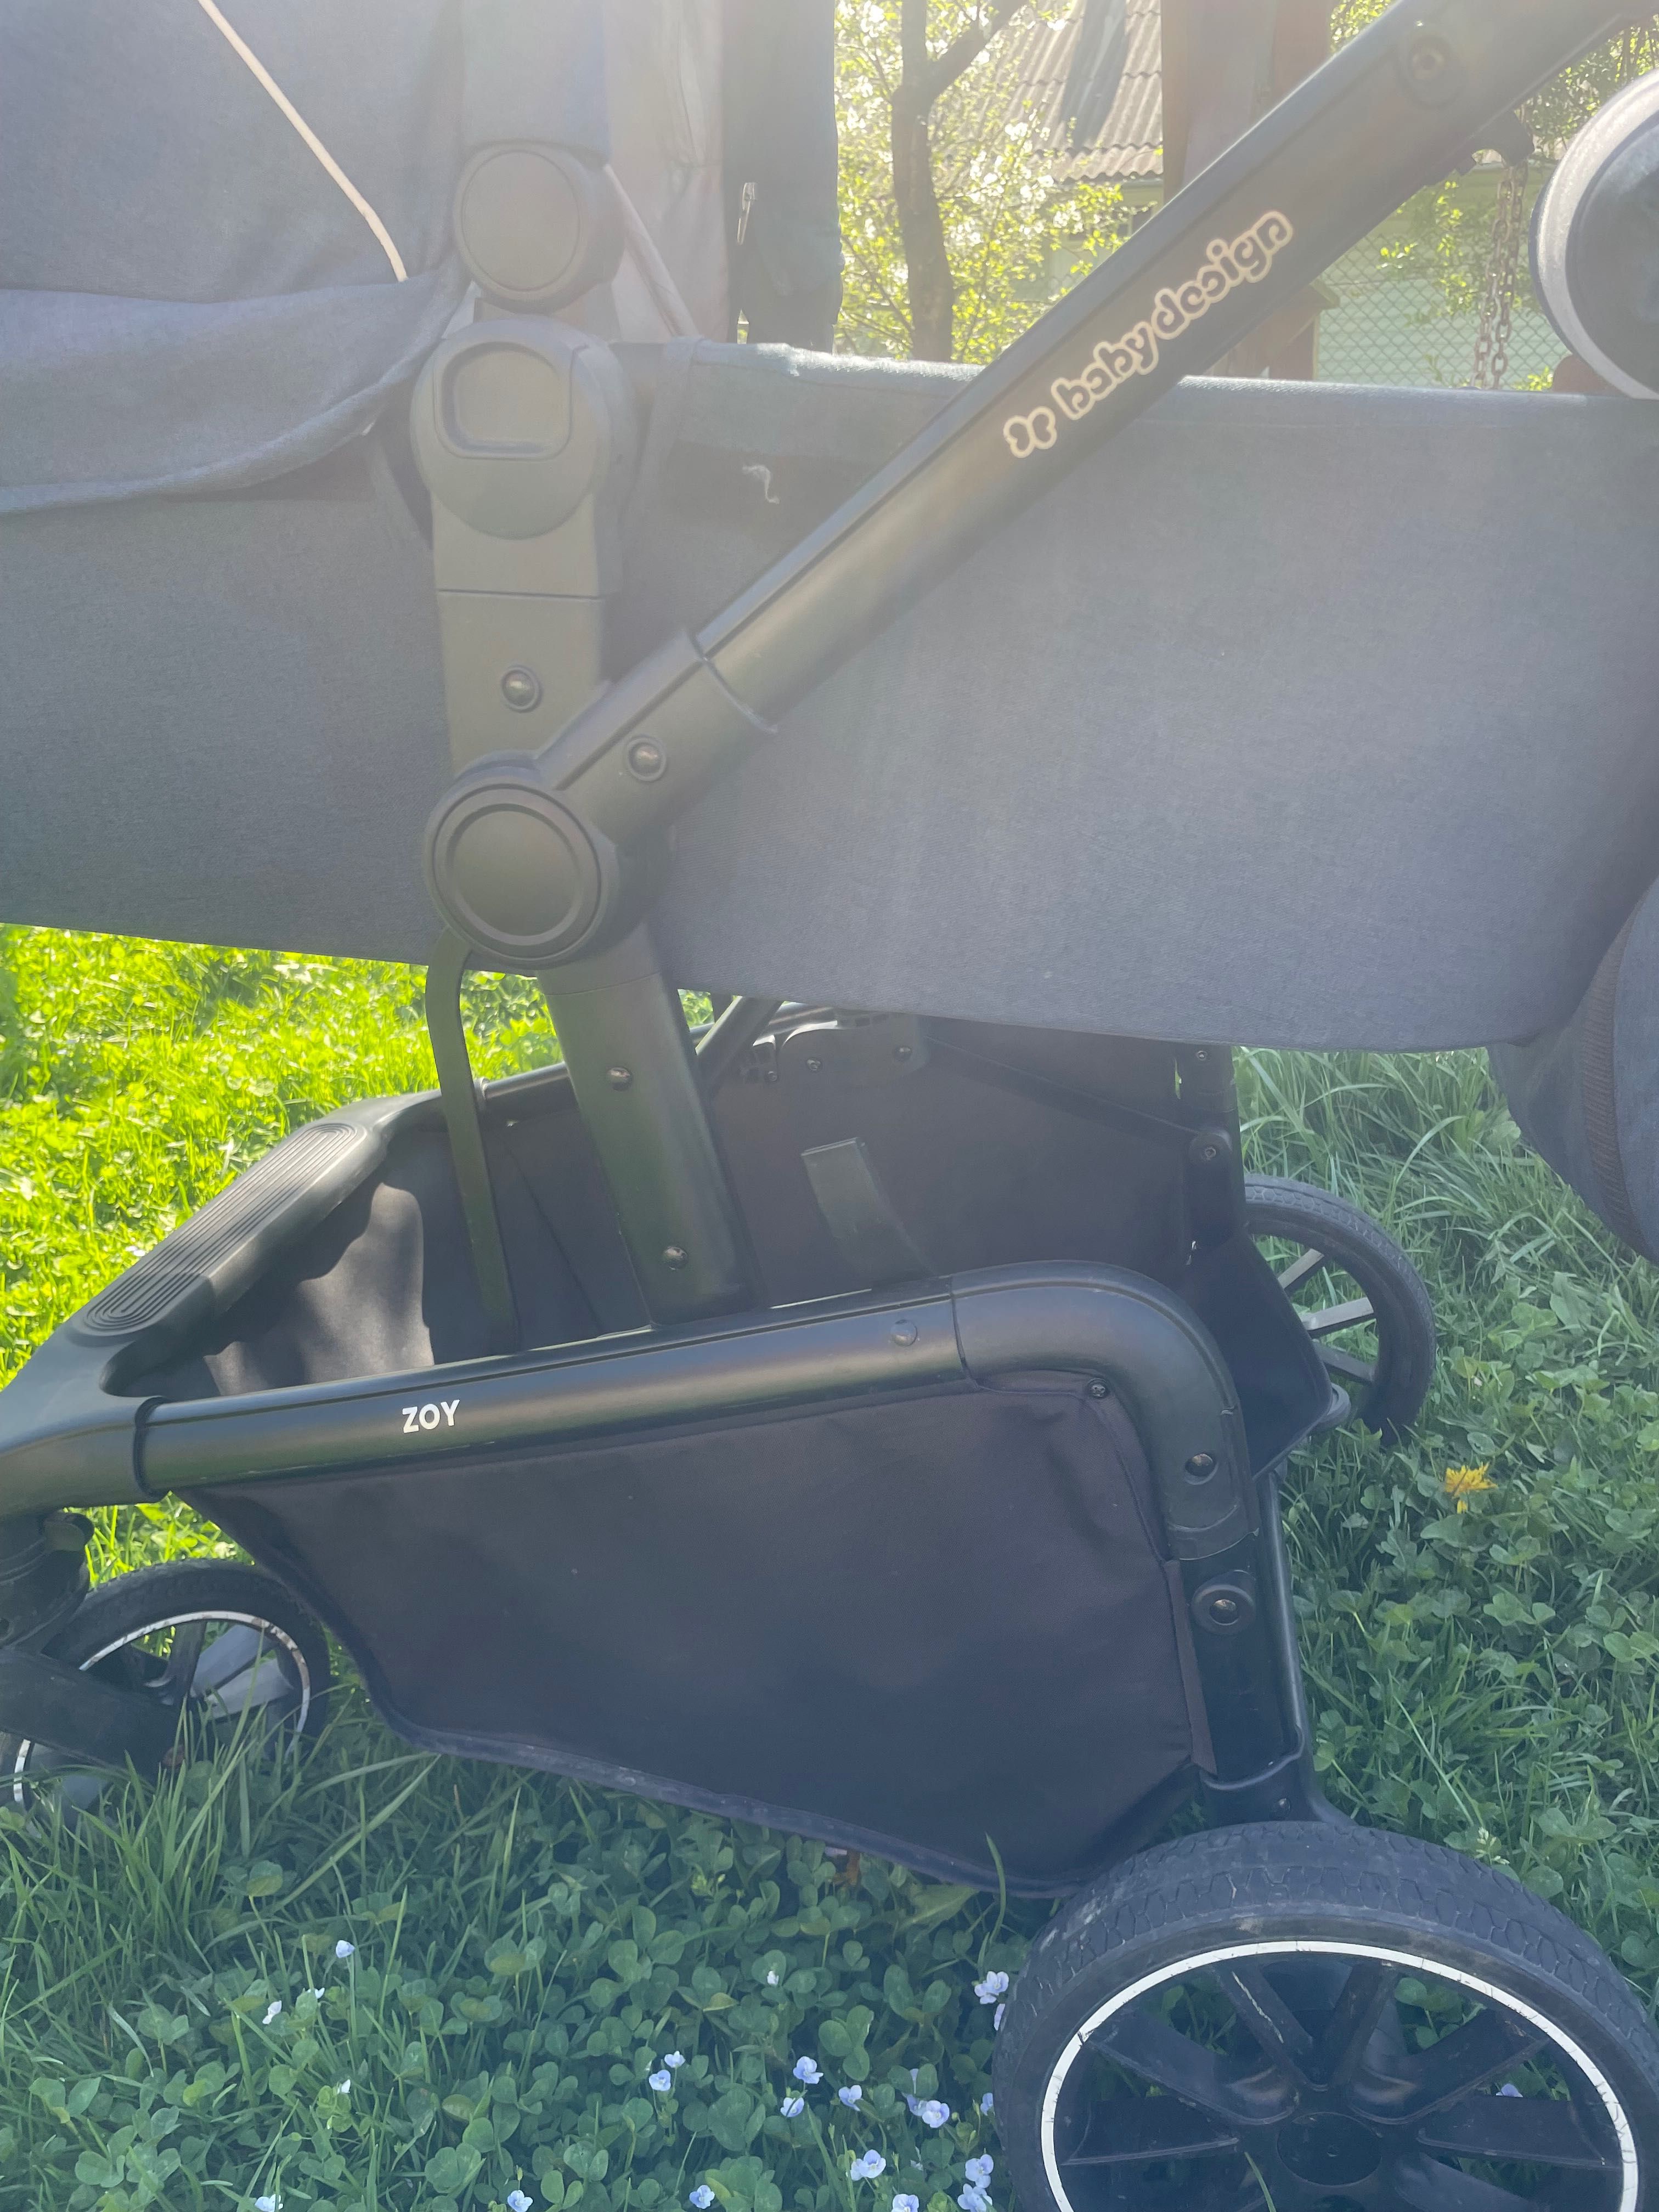 Продам коляску візок 2 в 1 ,baby design(куплена нова закордоном)